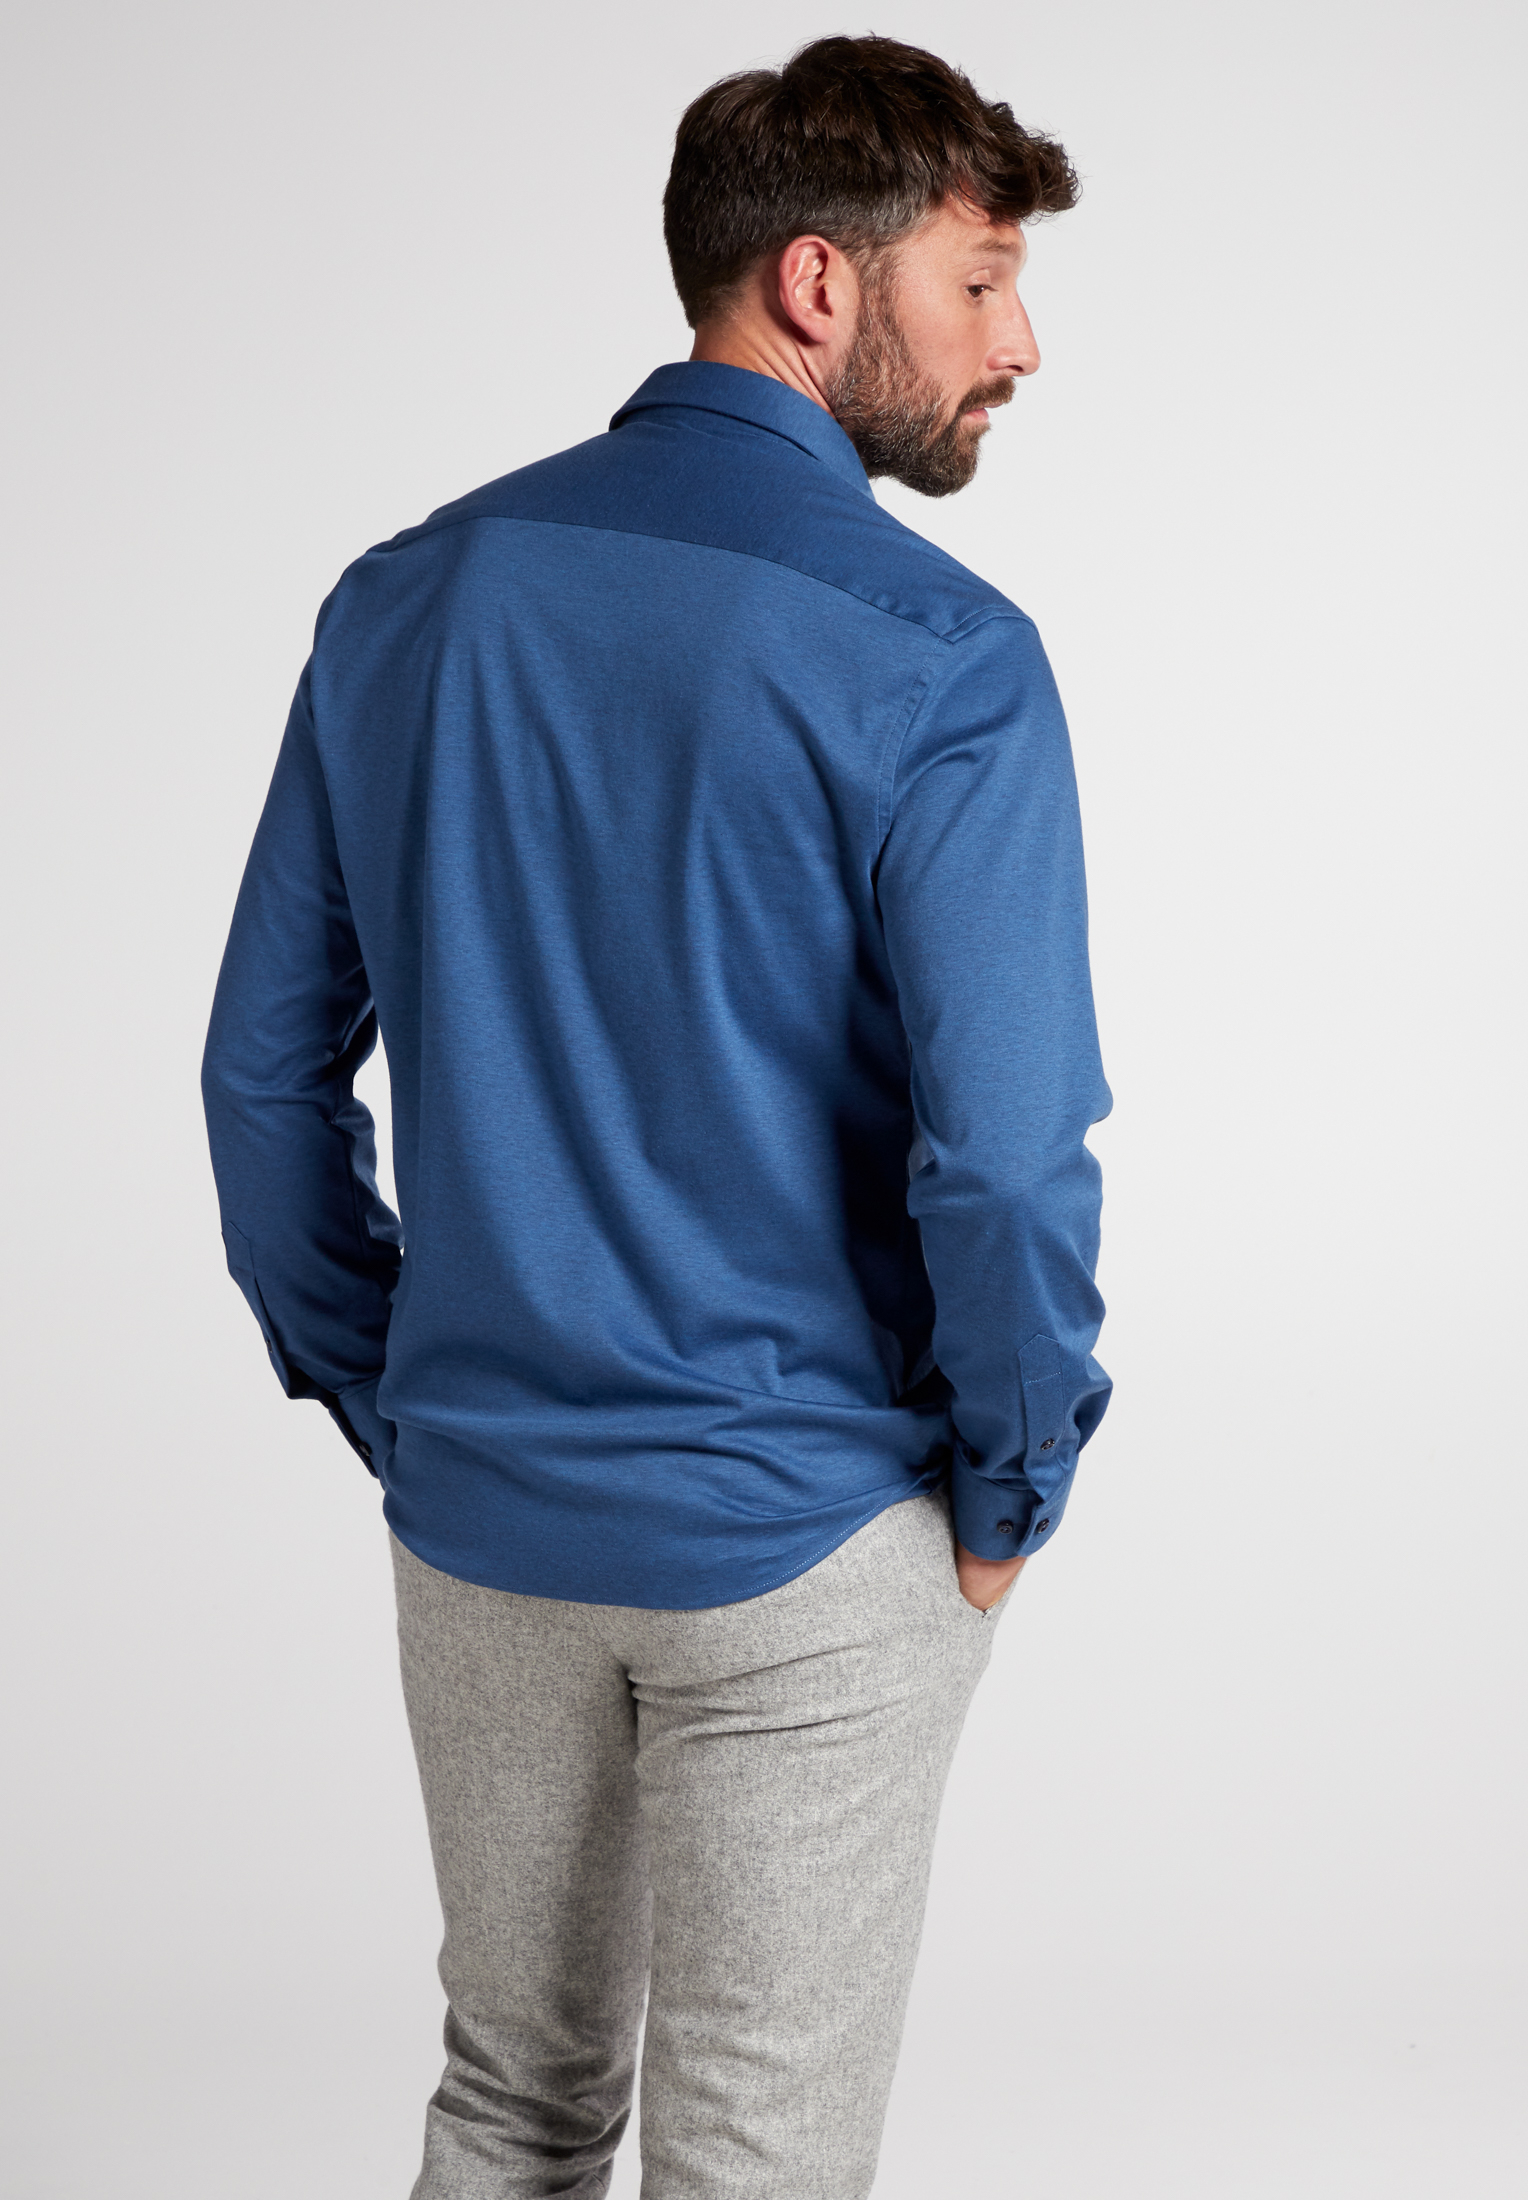 MODERN blau 47 unifarben | 1SH00374-01-41-47-1/1 | blau | FIT Jersey Shirt Langarm in |